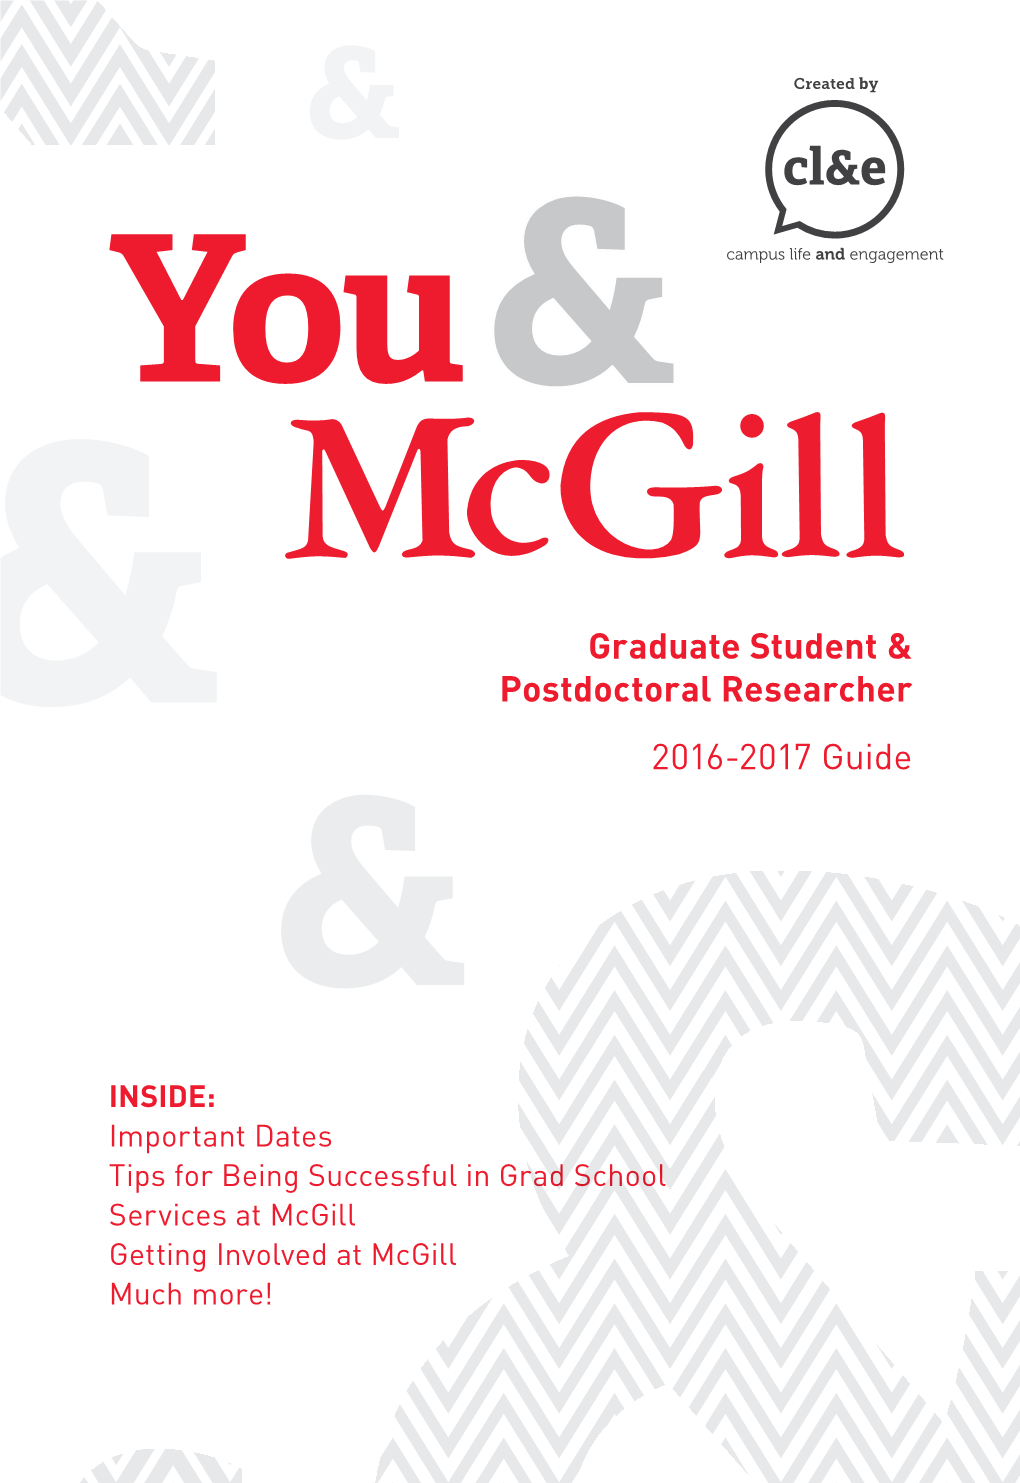 Graduate Student & Postdoctoral Researcher 2016-2017 Guide